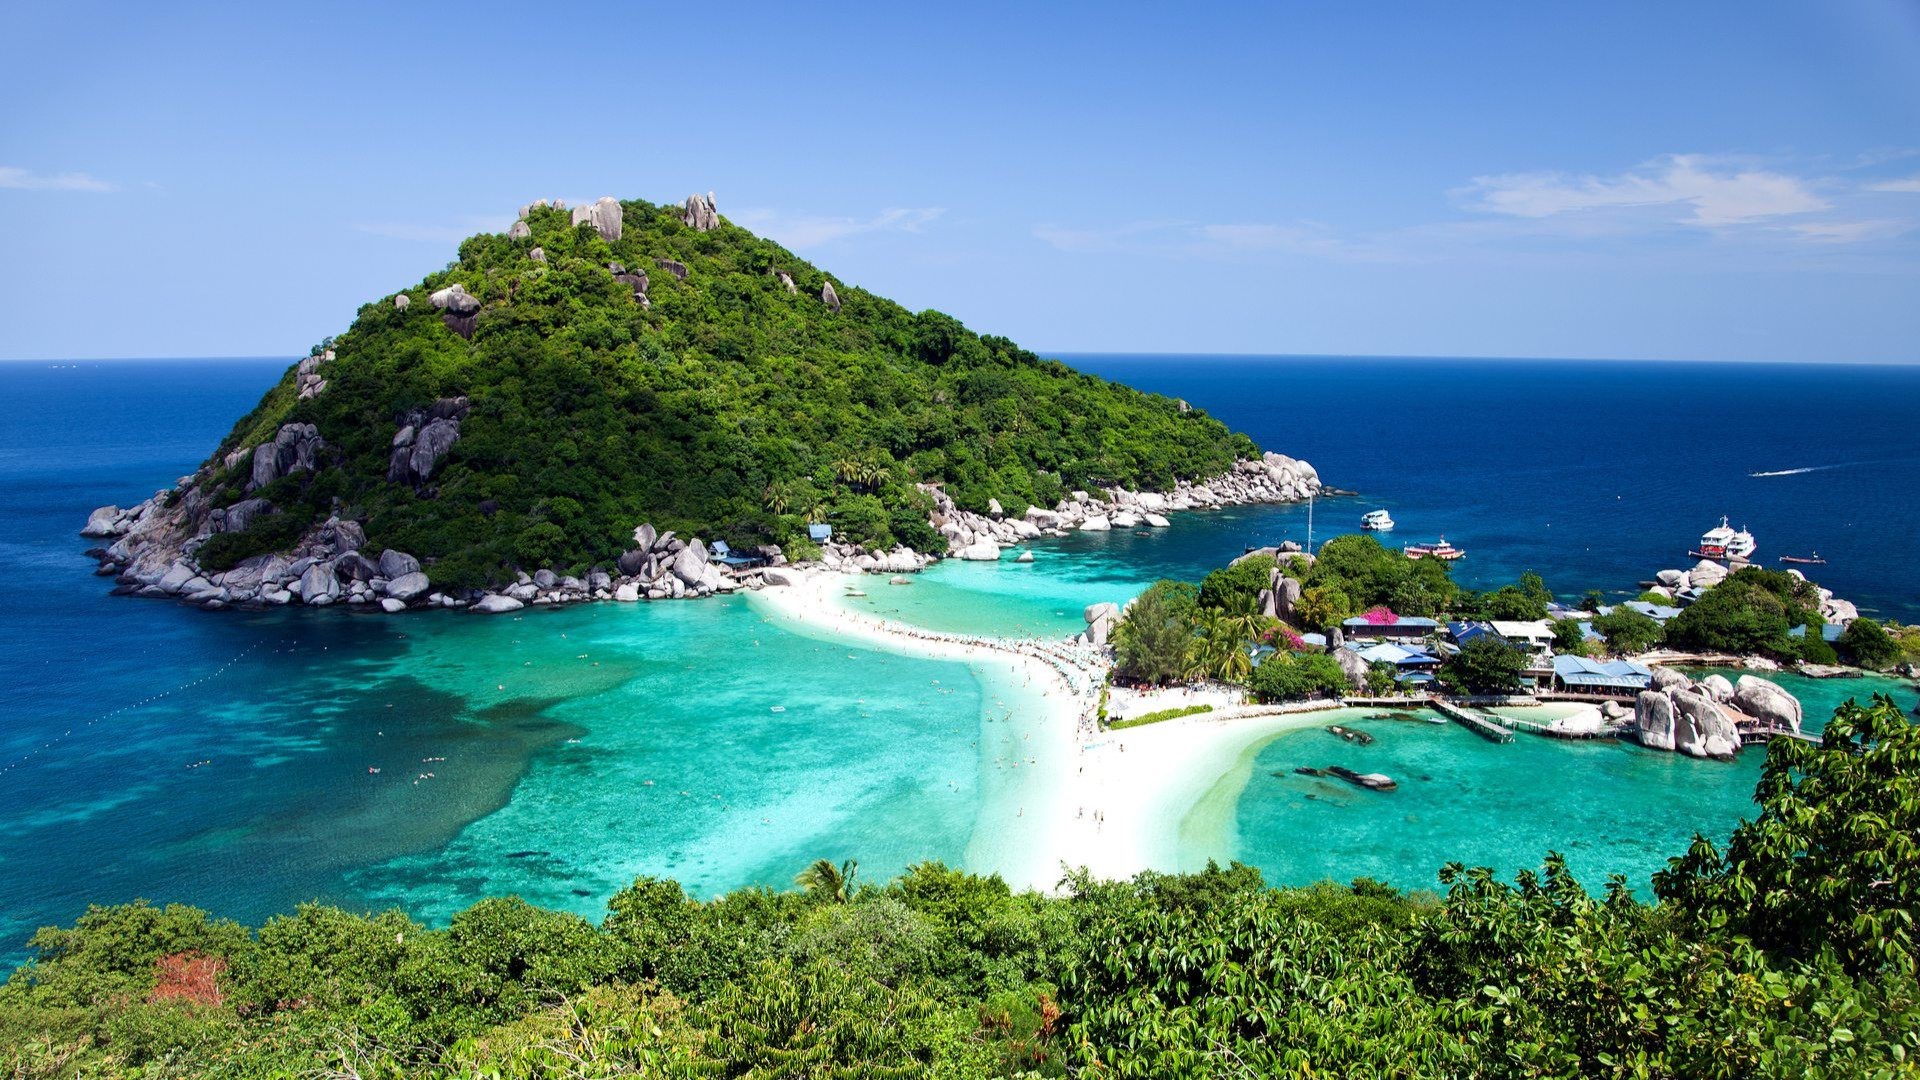 Koh Samui: An Idyllic Island Paradise in the Gulf of Thailand